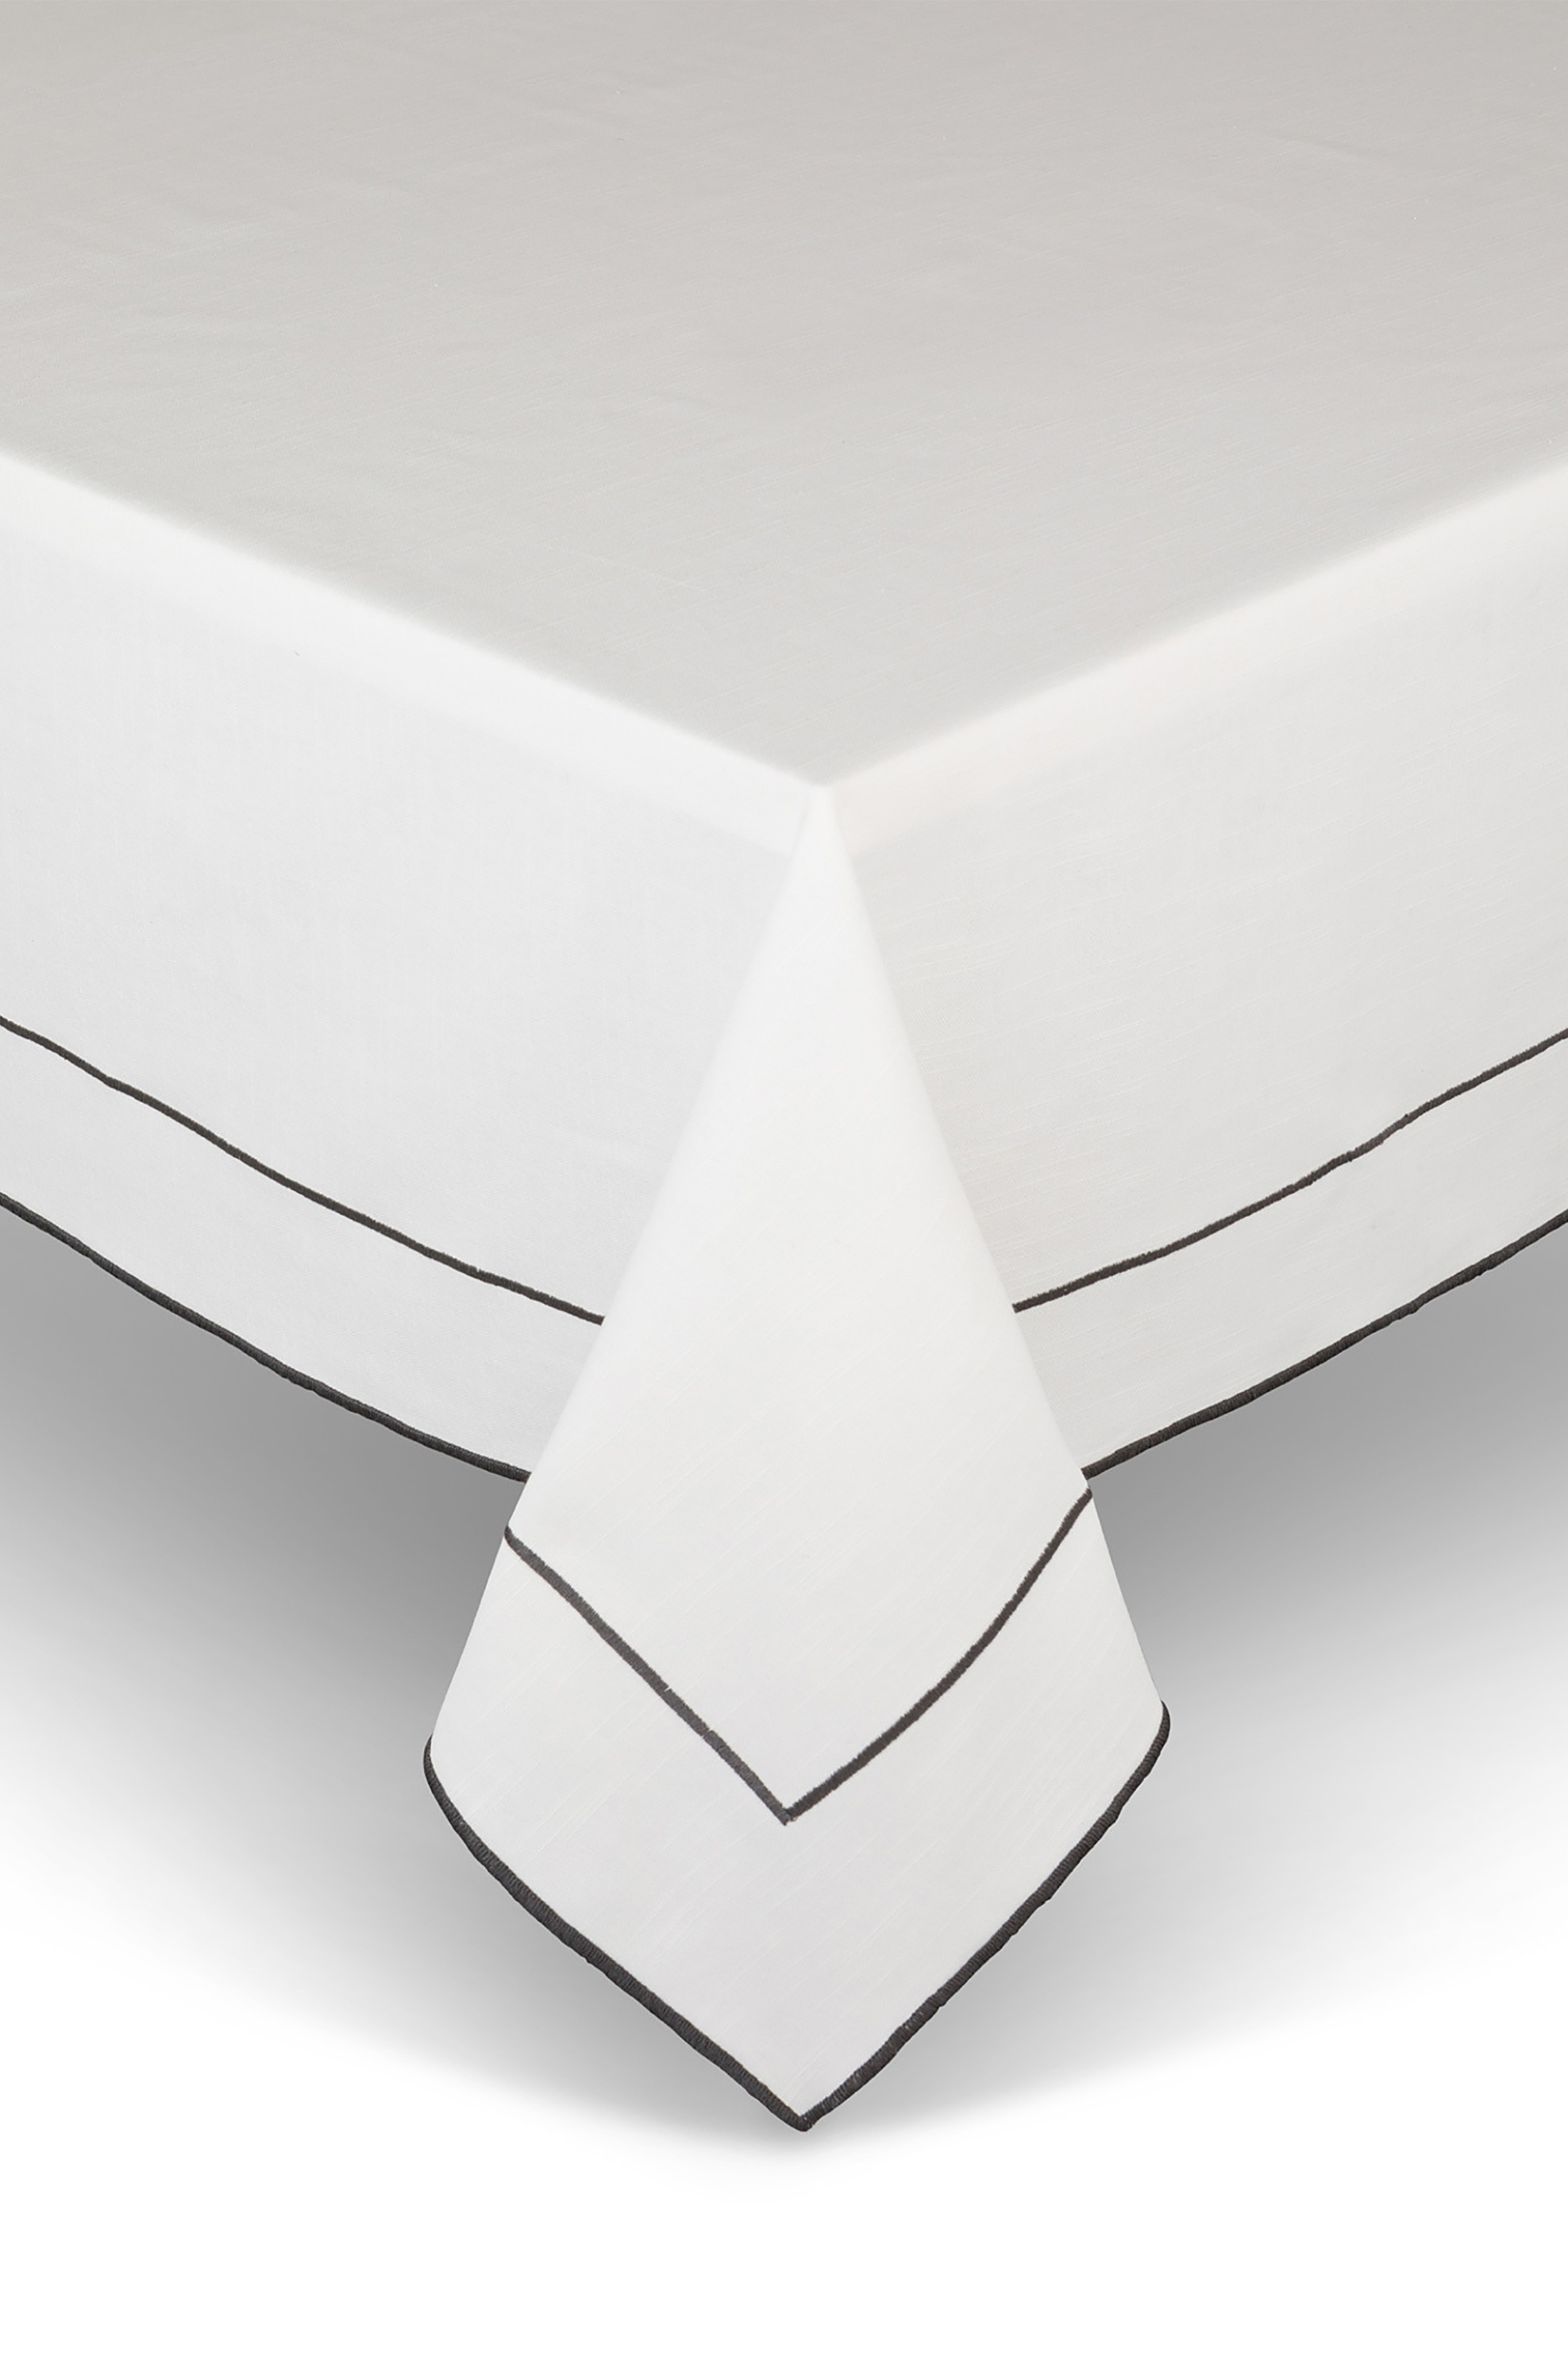 Coincasa τραπεζομάντηλο με contrast ρίγες στο τελείωμα "Marta" 140 x 250 cm - 007249082 Λευκό 2-7054006884|EE0248|